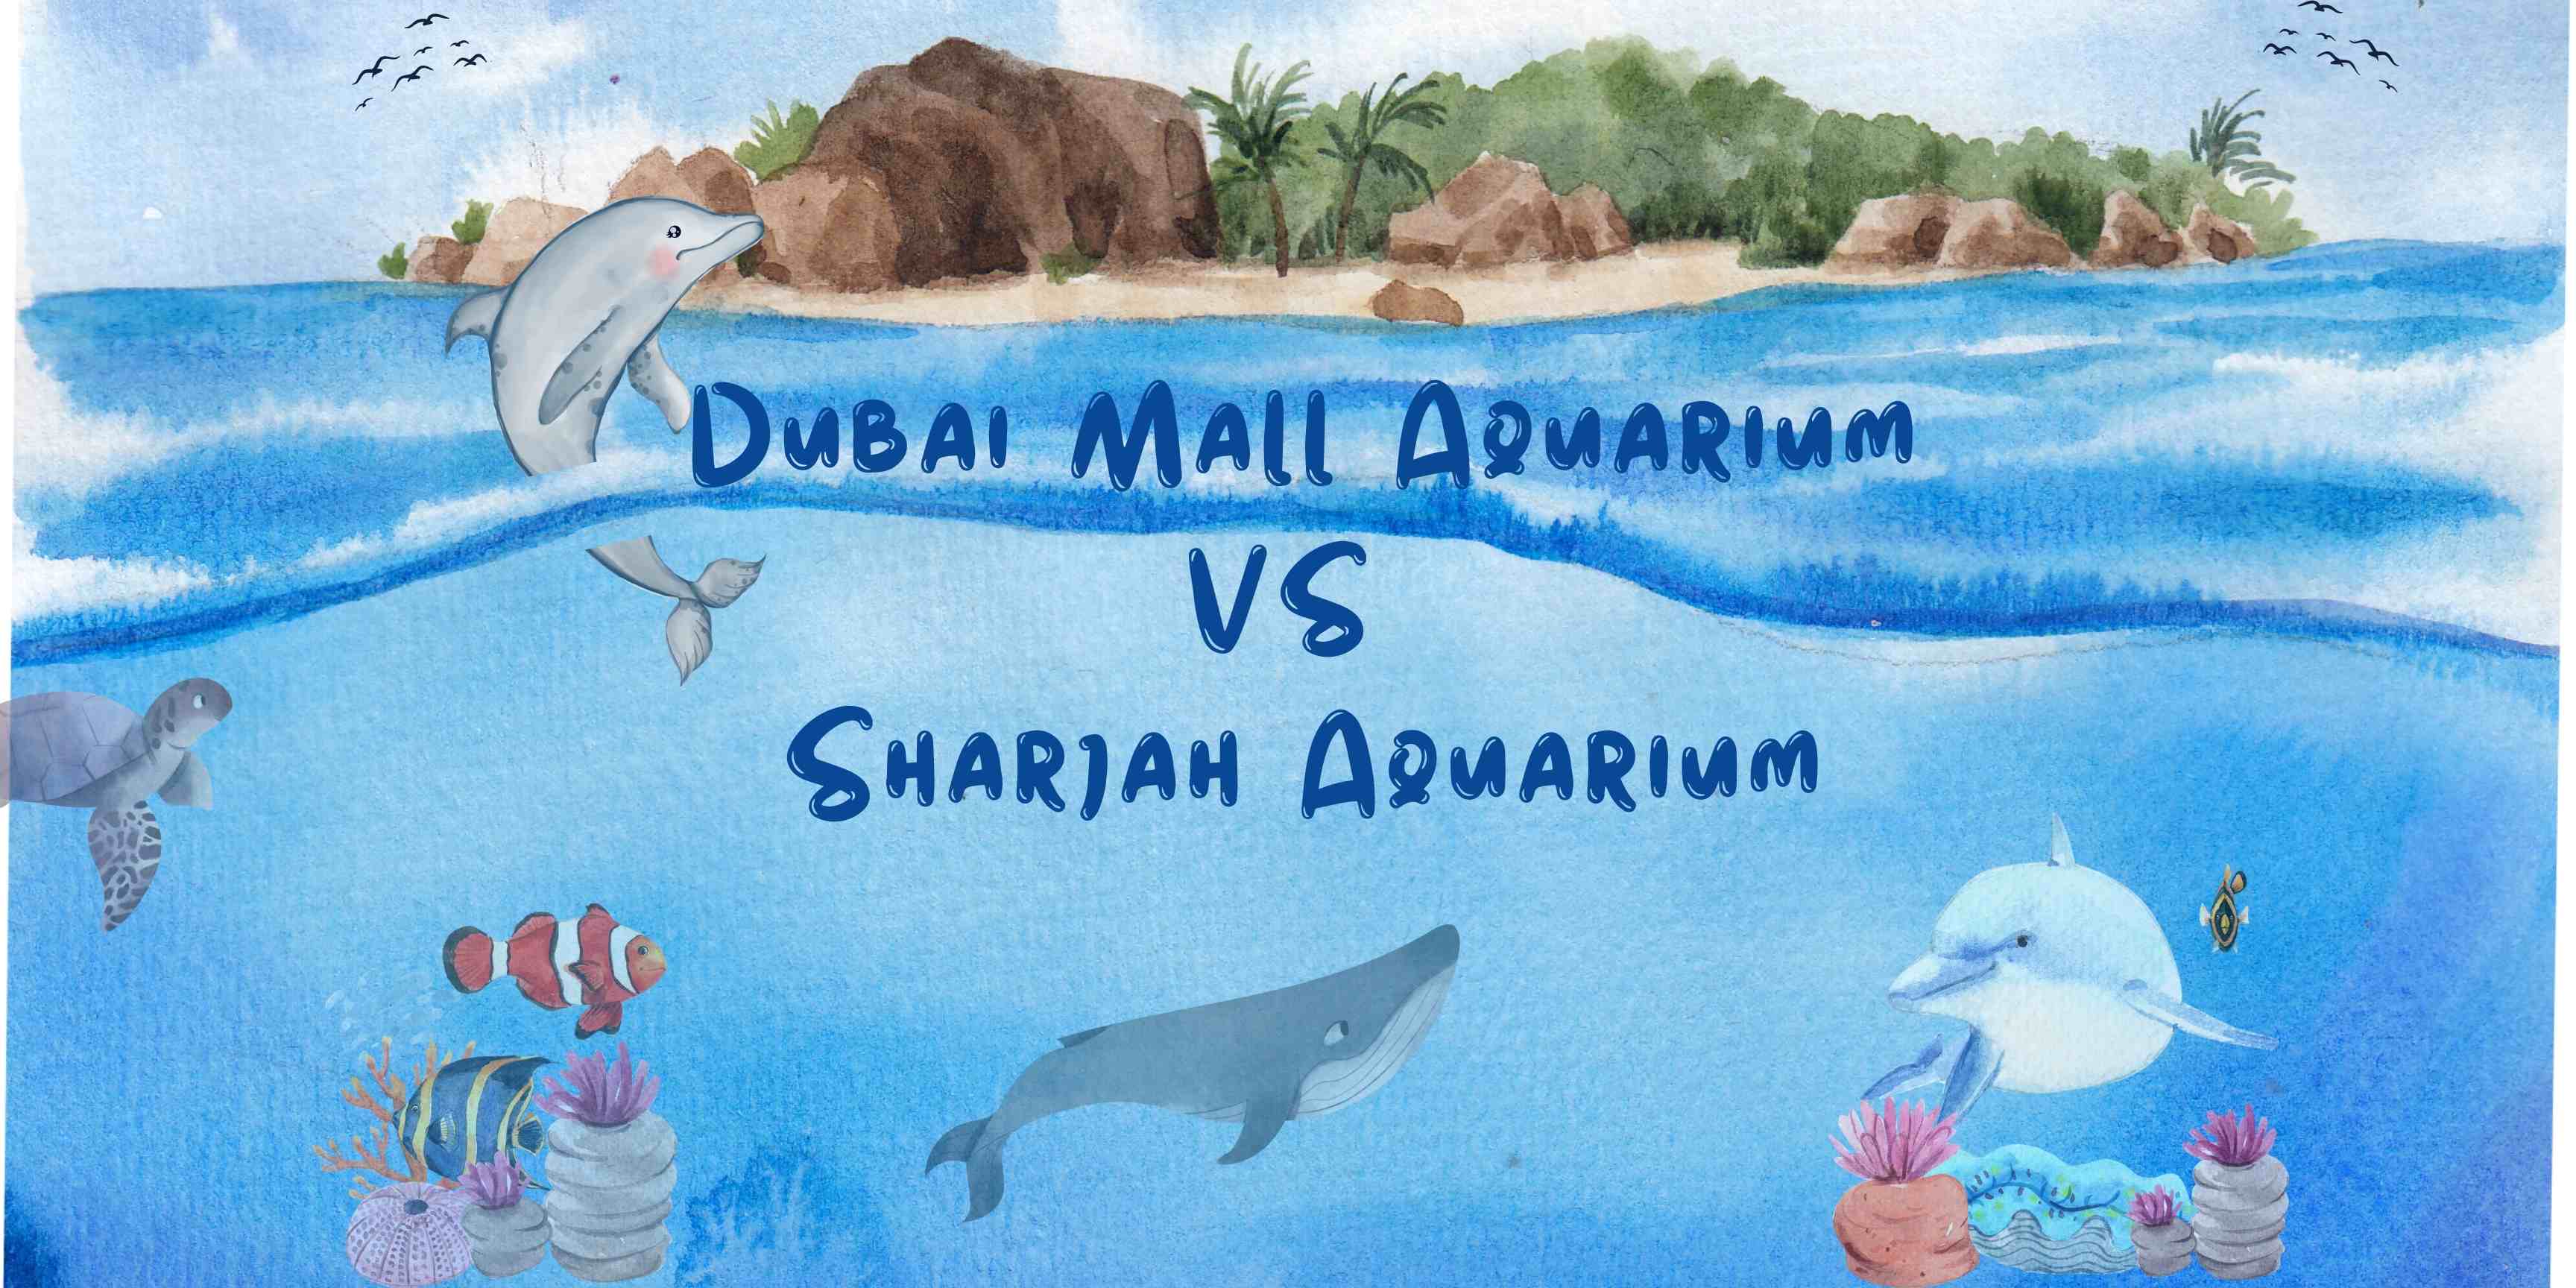 Dubai Mall Aquarium or Sharjah Aquarium: Which Should You Visit